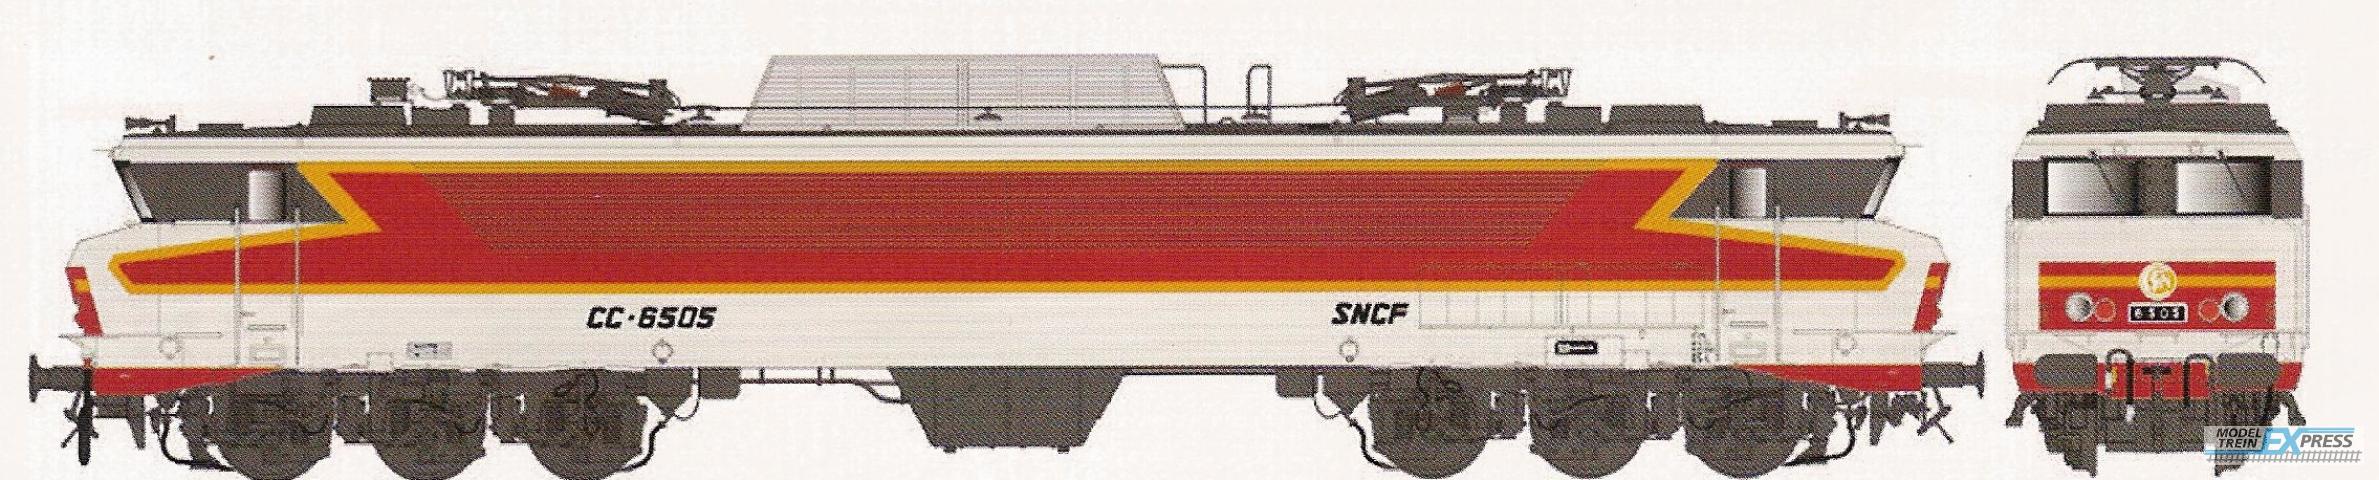 LS Models 10323 CC 6505, grijs/rood/oranje, TEE, platen, Beffara logo, zuidoost  /  Ep. IV  /  SNCF  /  HO  /  DC  /  1 P.